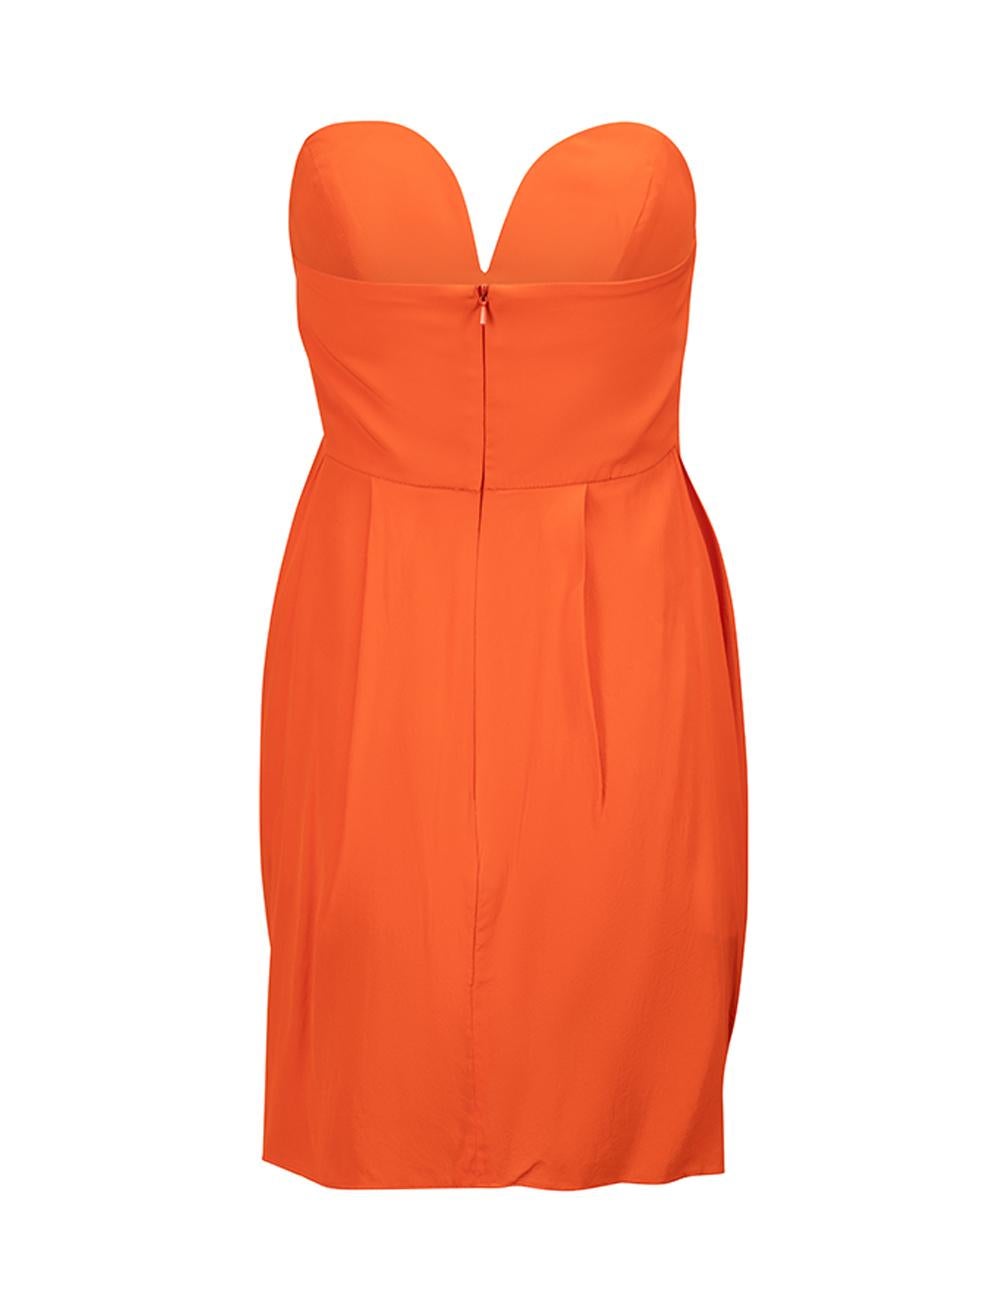 Red Orange Silk Soiree Drape Mini Dress Size M